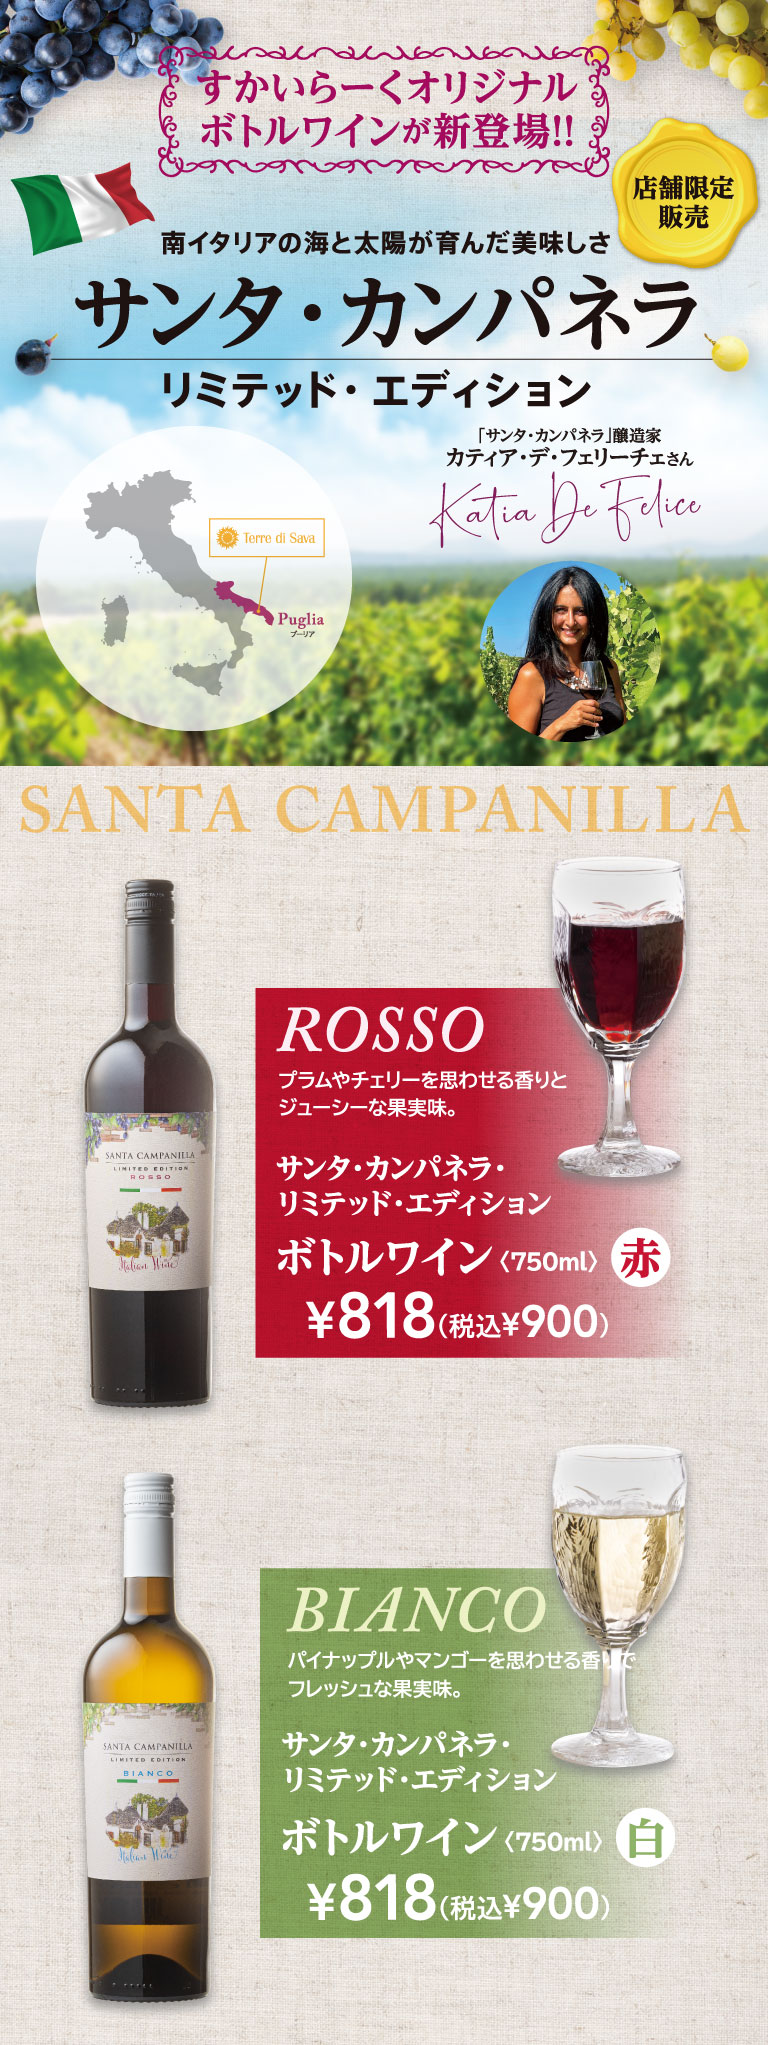 Santa Campanella 限量版瓶酒紅白雲雀（すかいらーく）原味